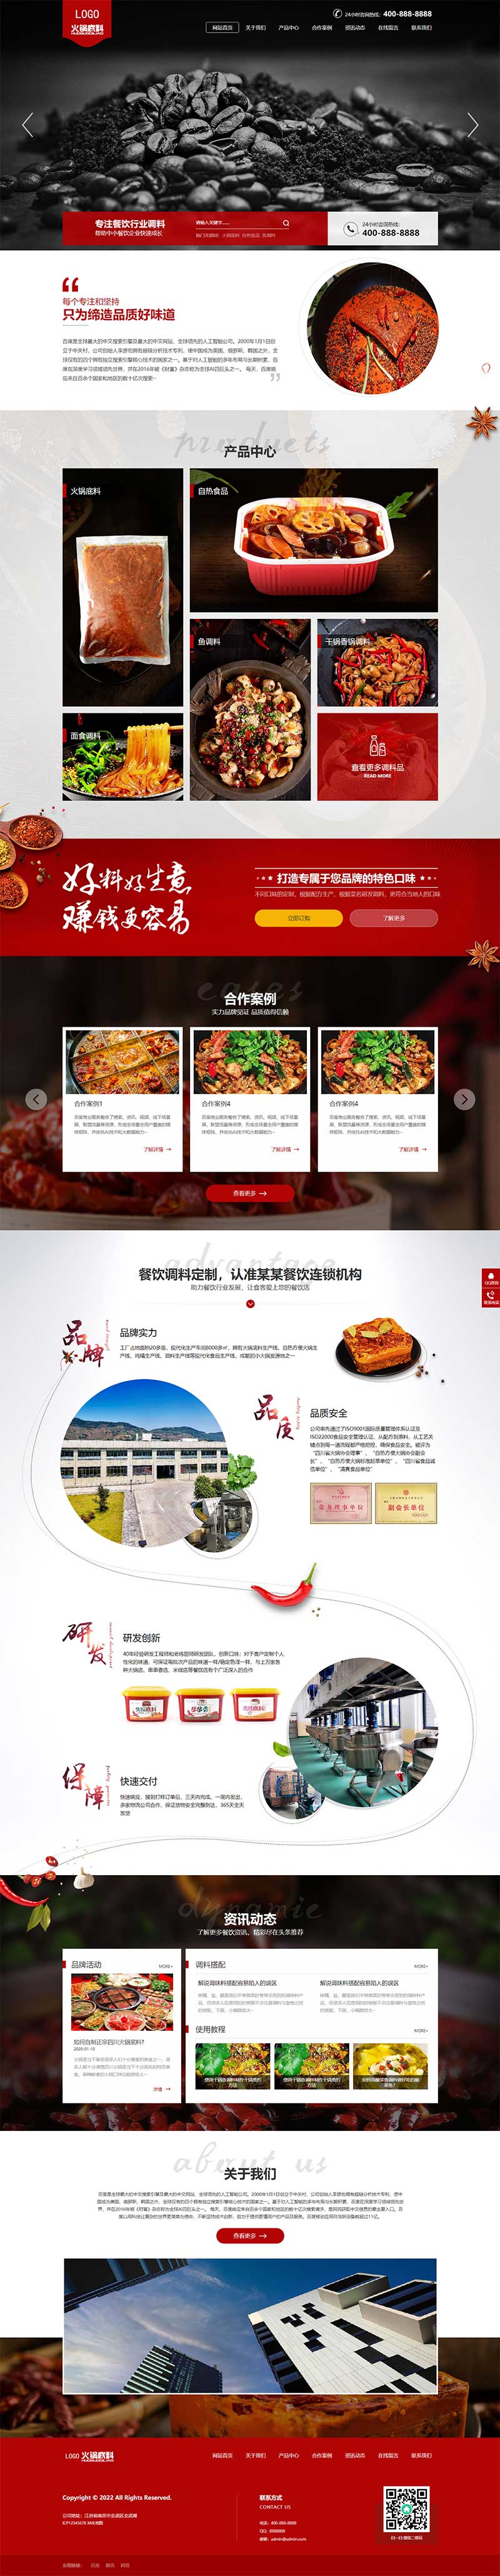 (PC+WAP)营销型餐饮美食网站源码 pbootcms高端火锅底料食品调料网站模板插图